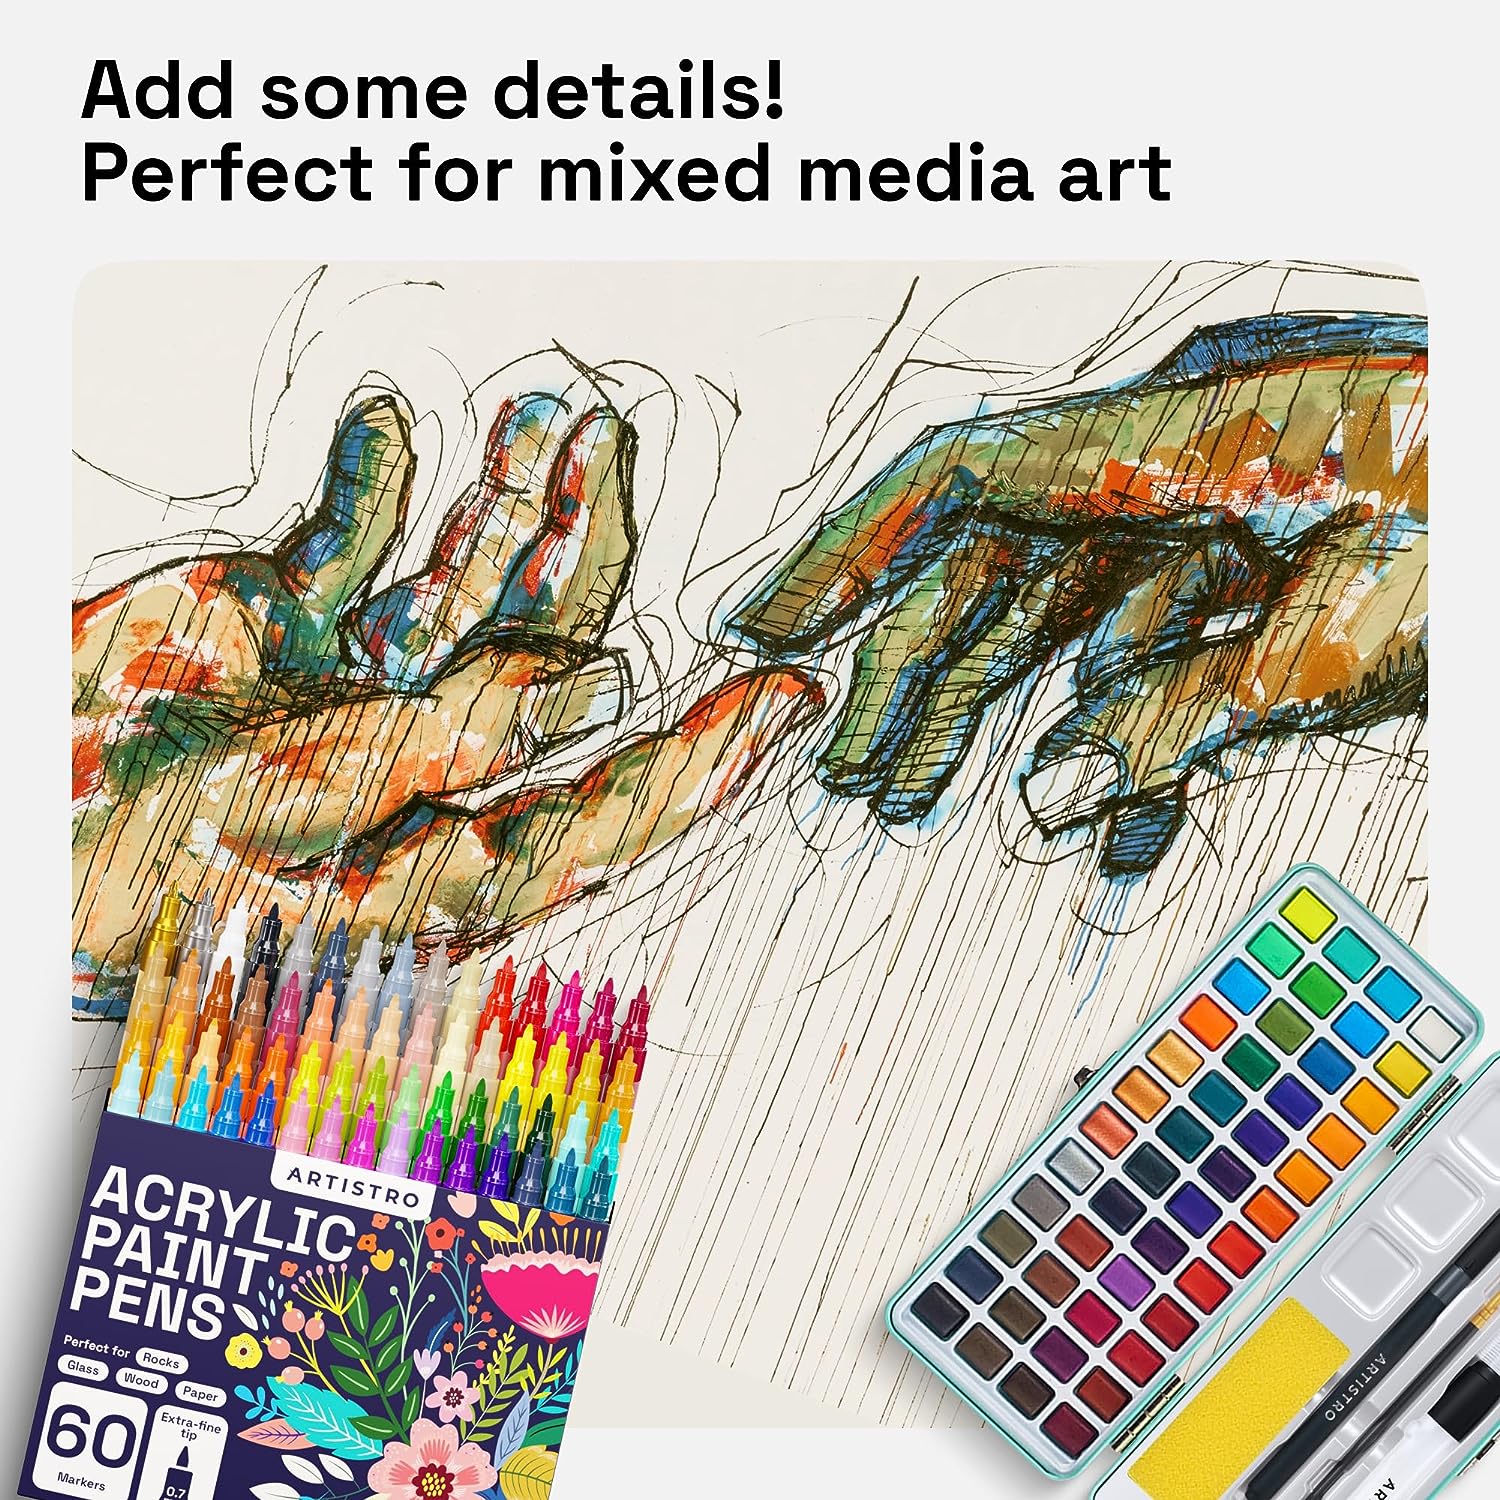 ARTISTRO Art Supply Bundle: Colorful Extra Dozen Art Bundle